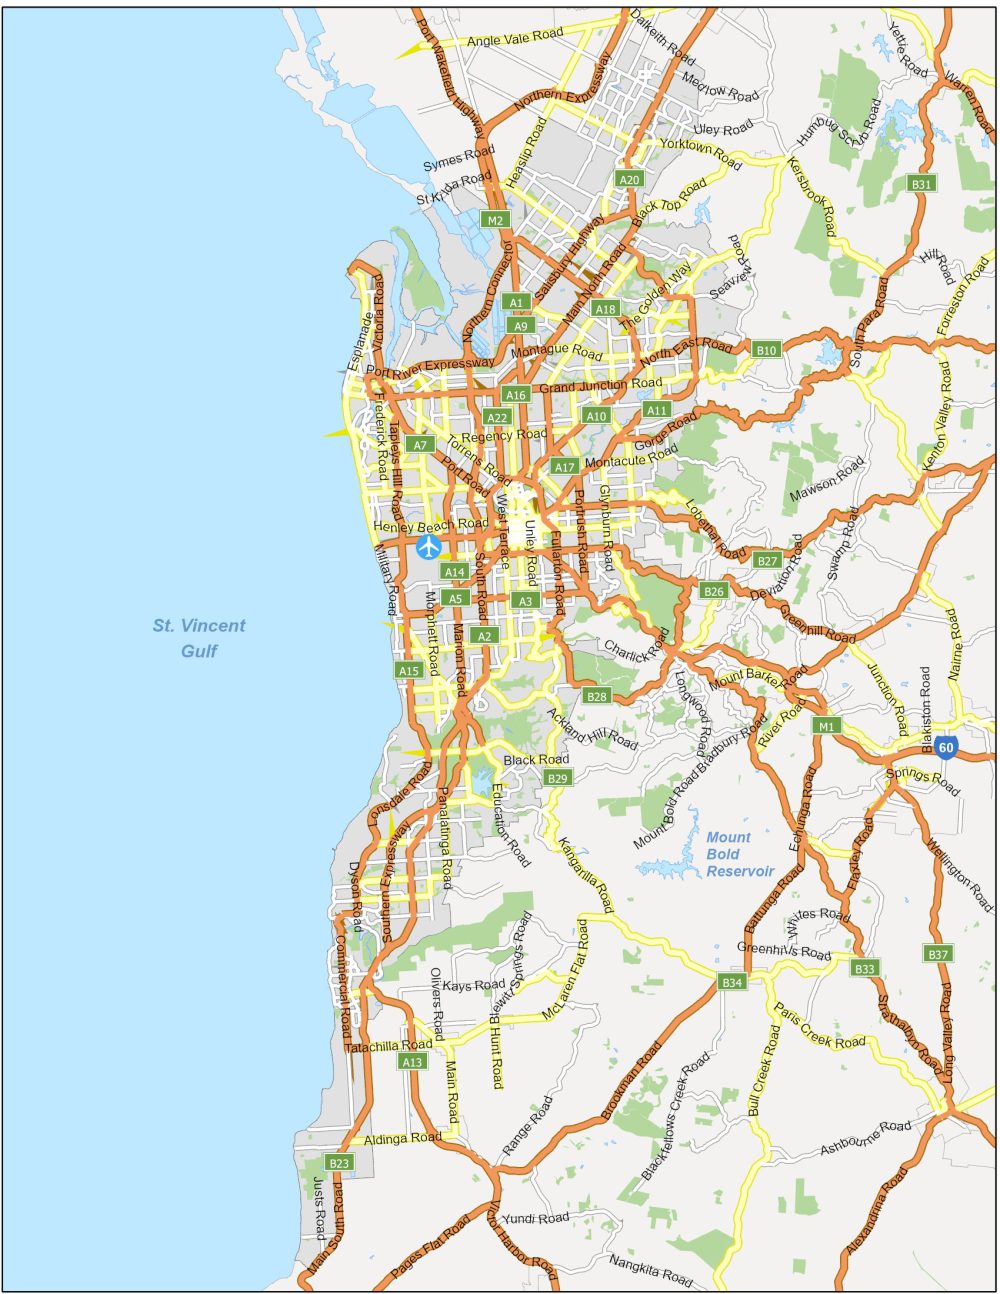 Adelaide Road Map Australia